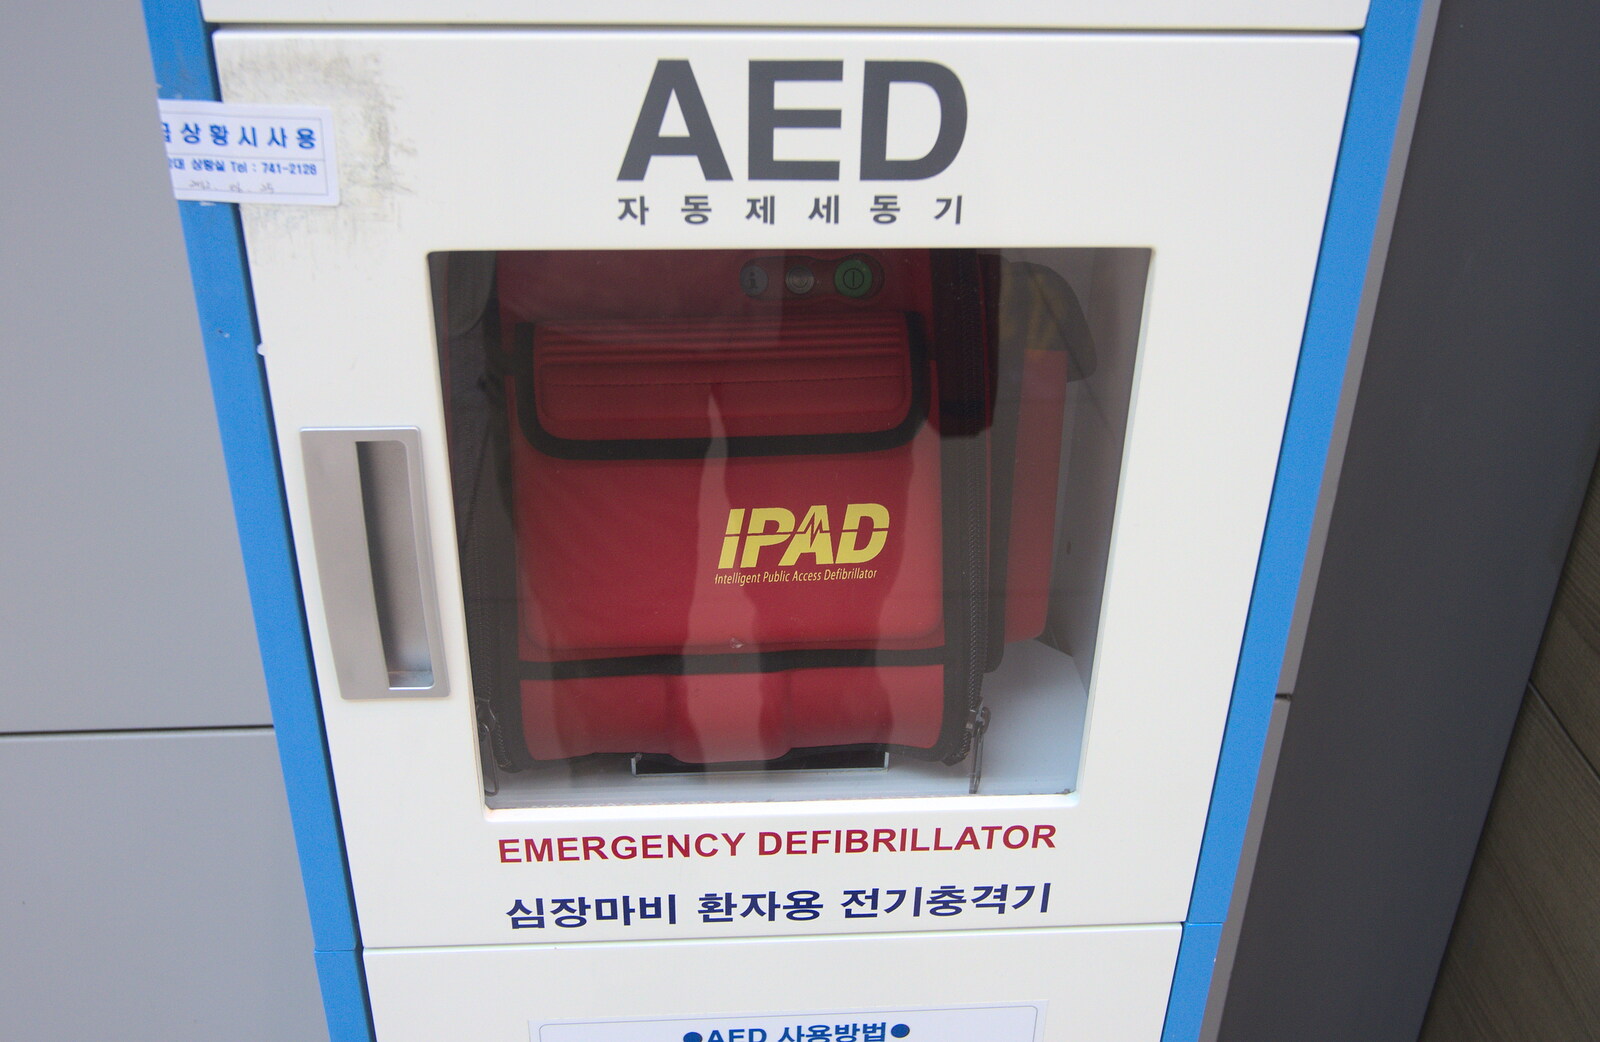 Something that Apple hasn't sued yet from Seomun Market, Daegu, South Korea - 1st July 2012